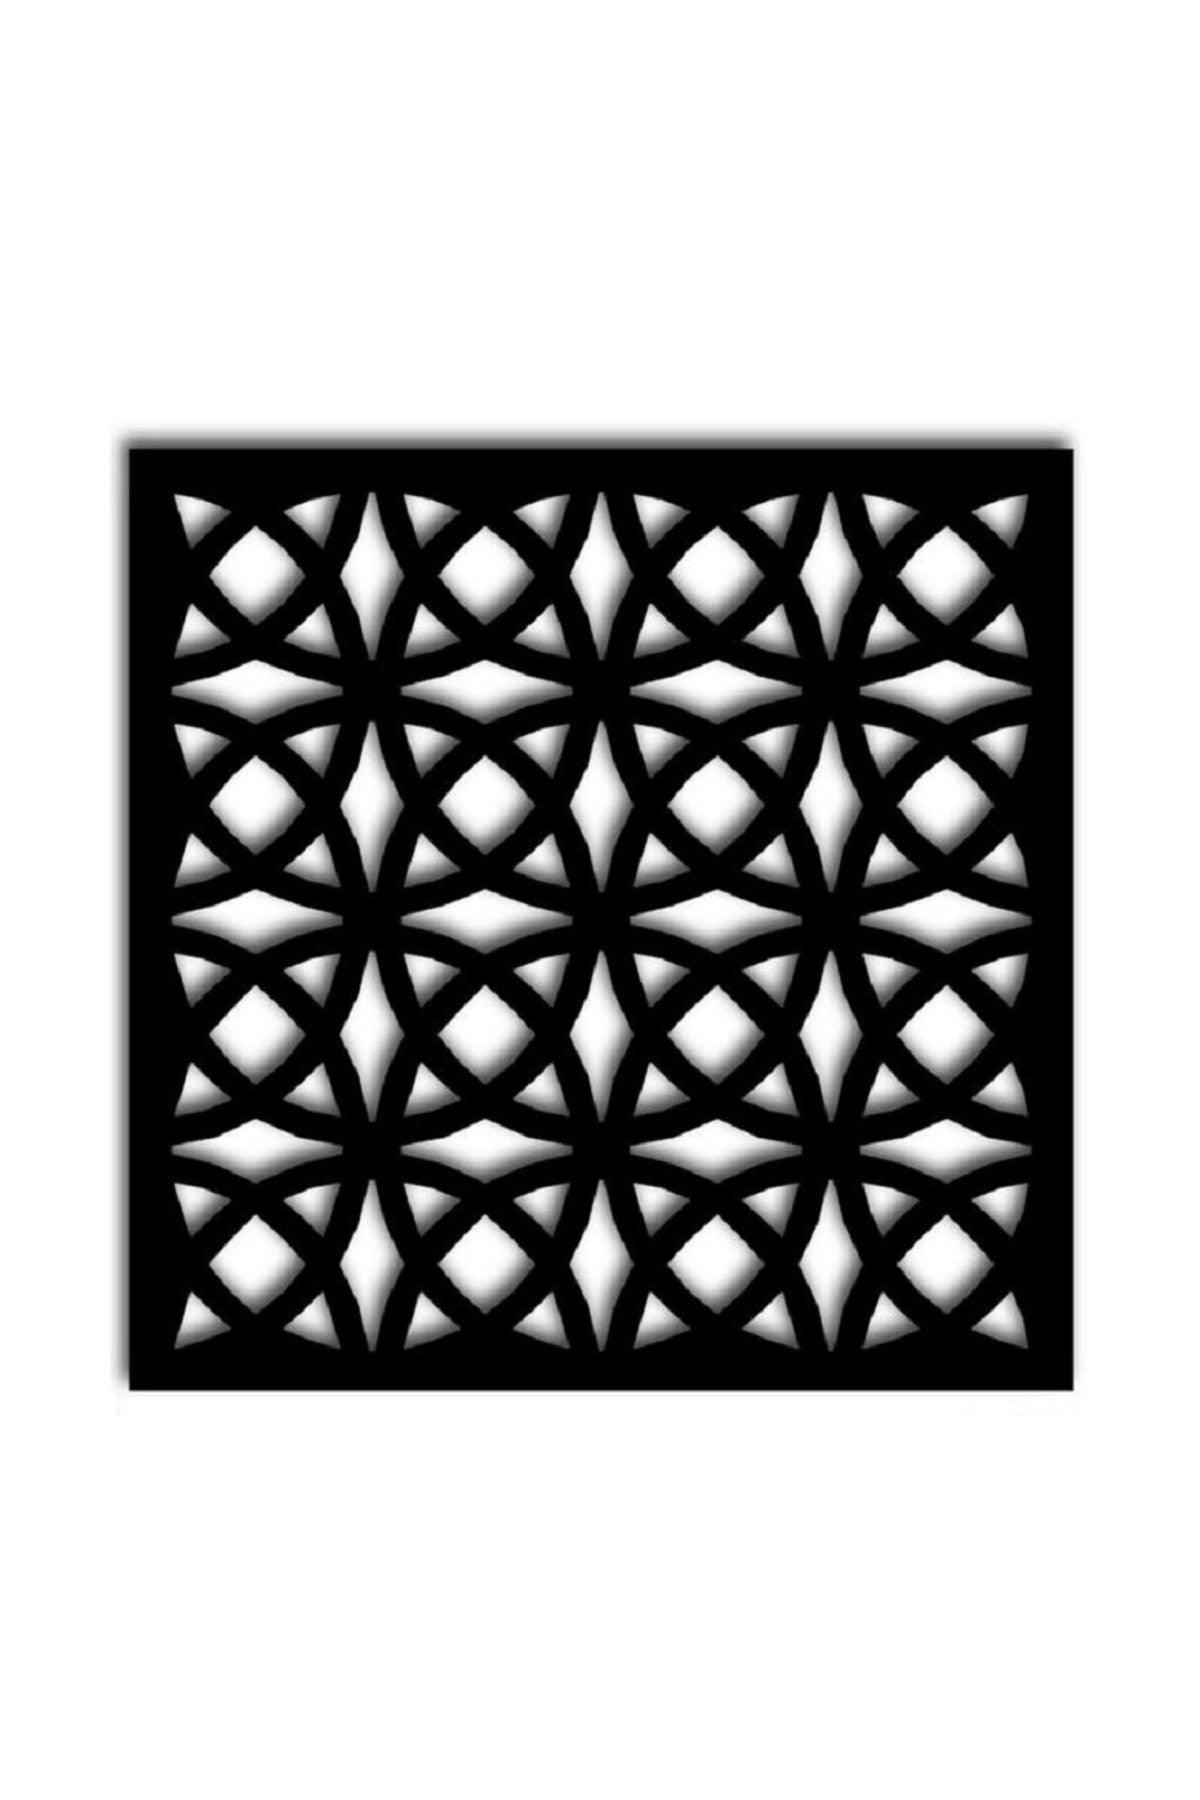 Wooden Room Divider/Separator/ Wall Panels Black Pattern - Swordslife